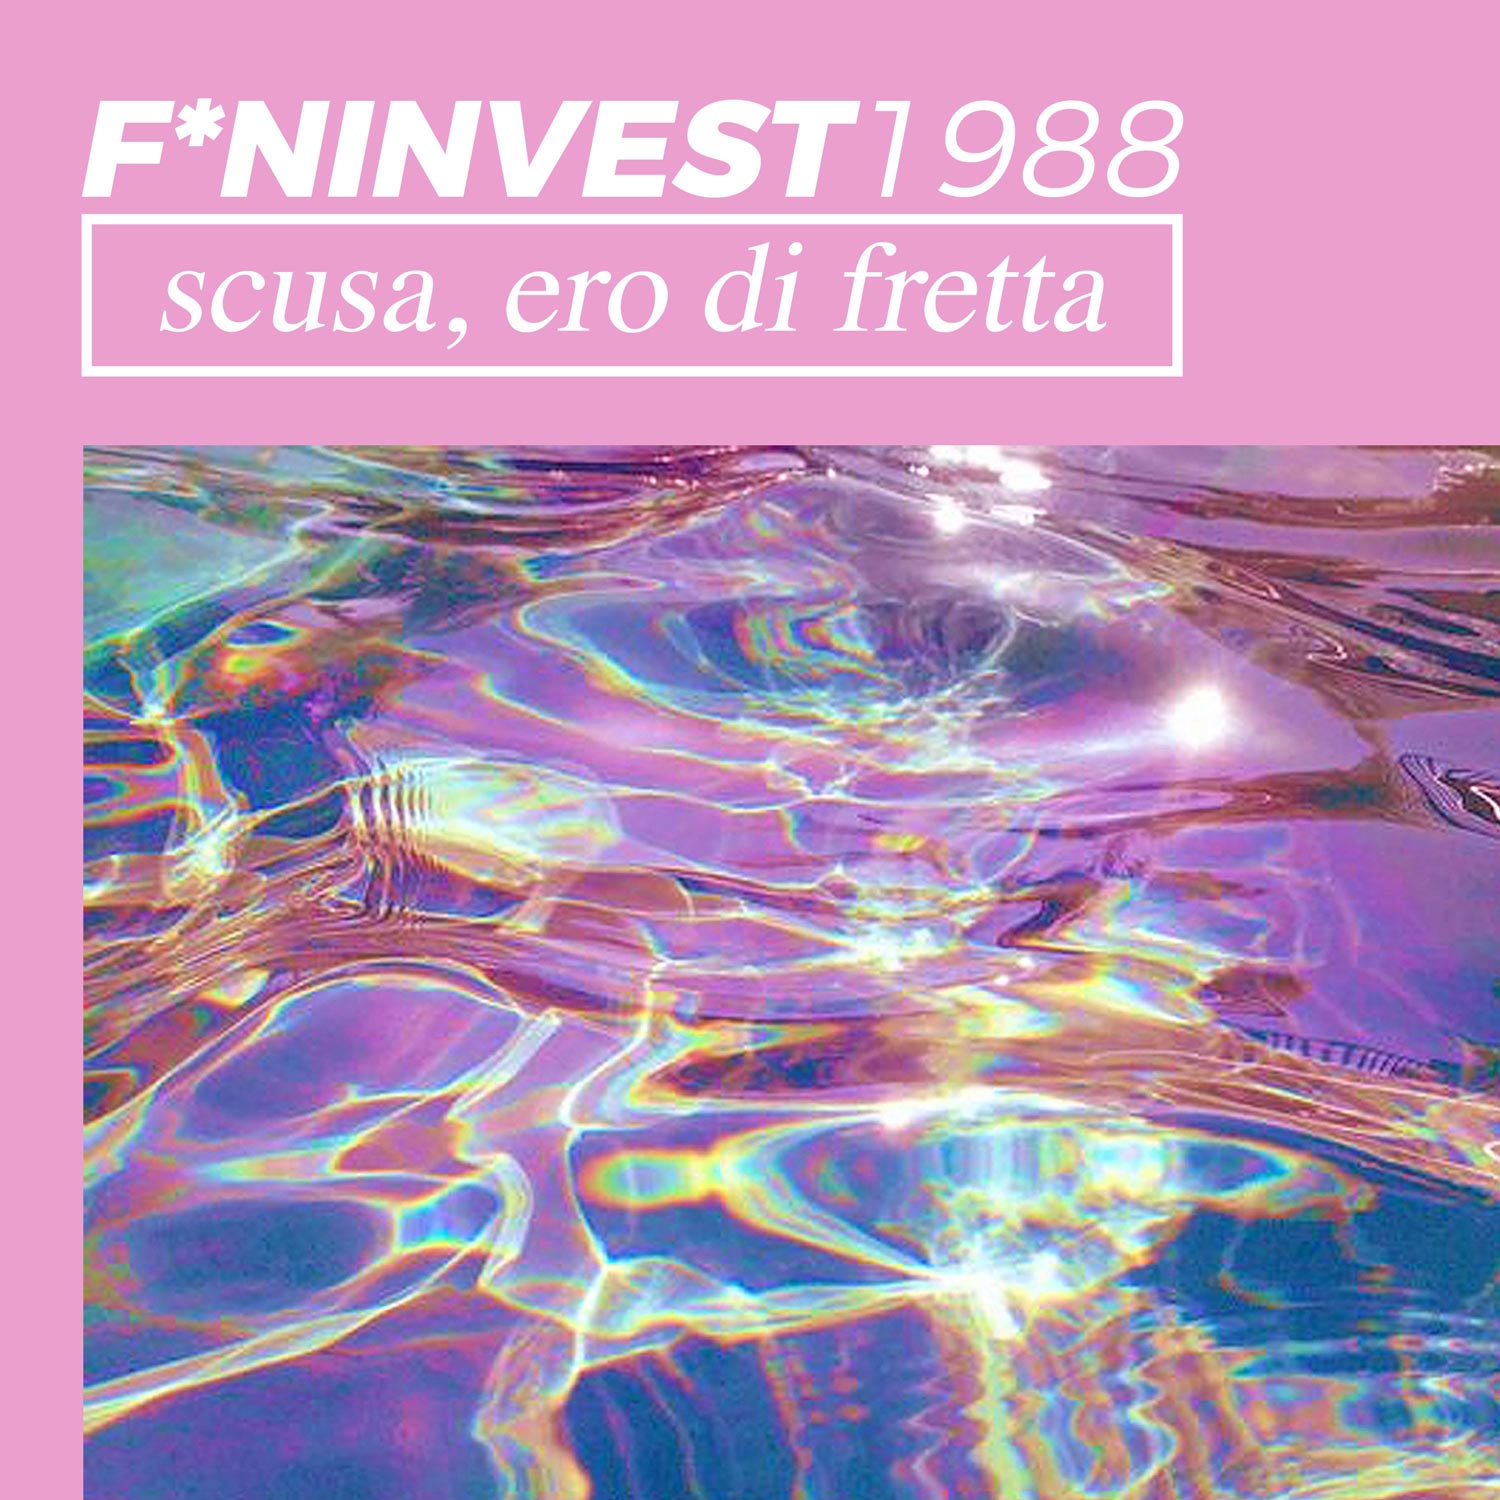 fininvest-1988-tassony-davide-glerean-scusa-ero-di-fretta-vaporwave-ep-singolo